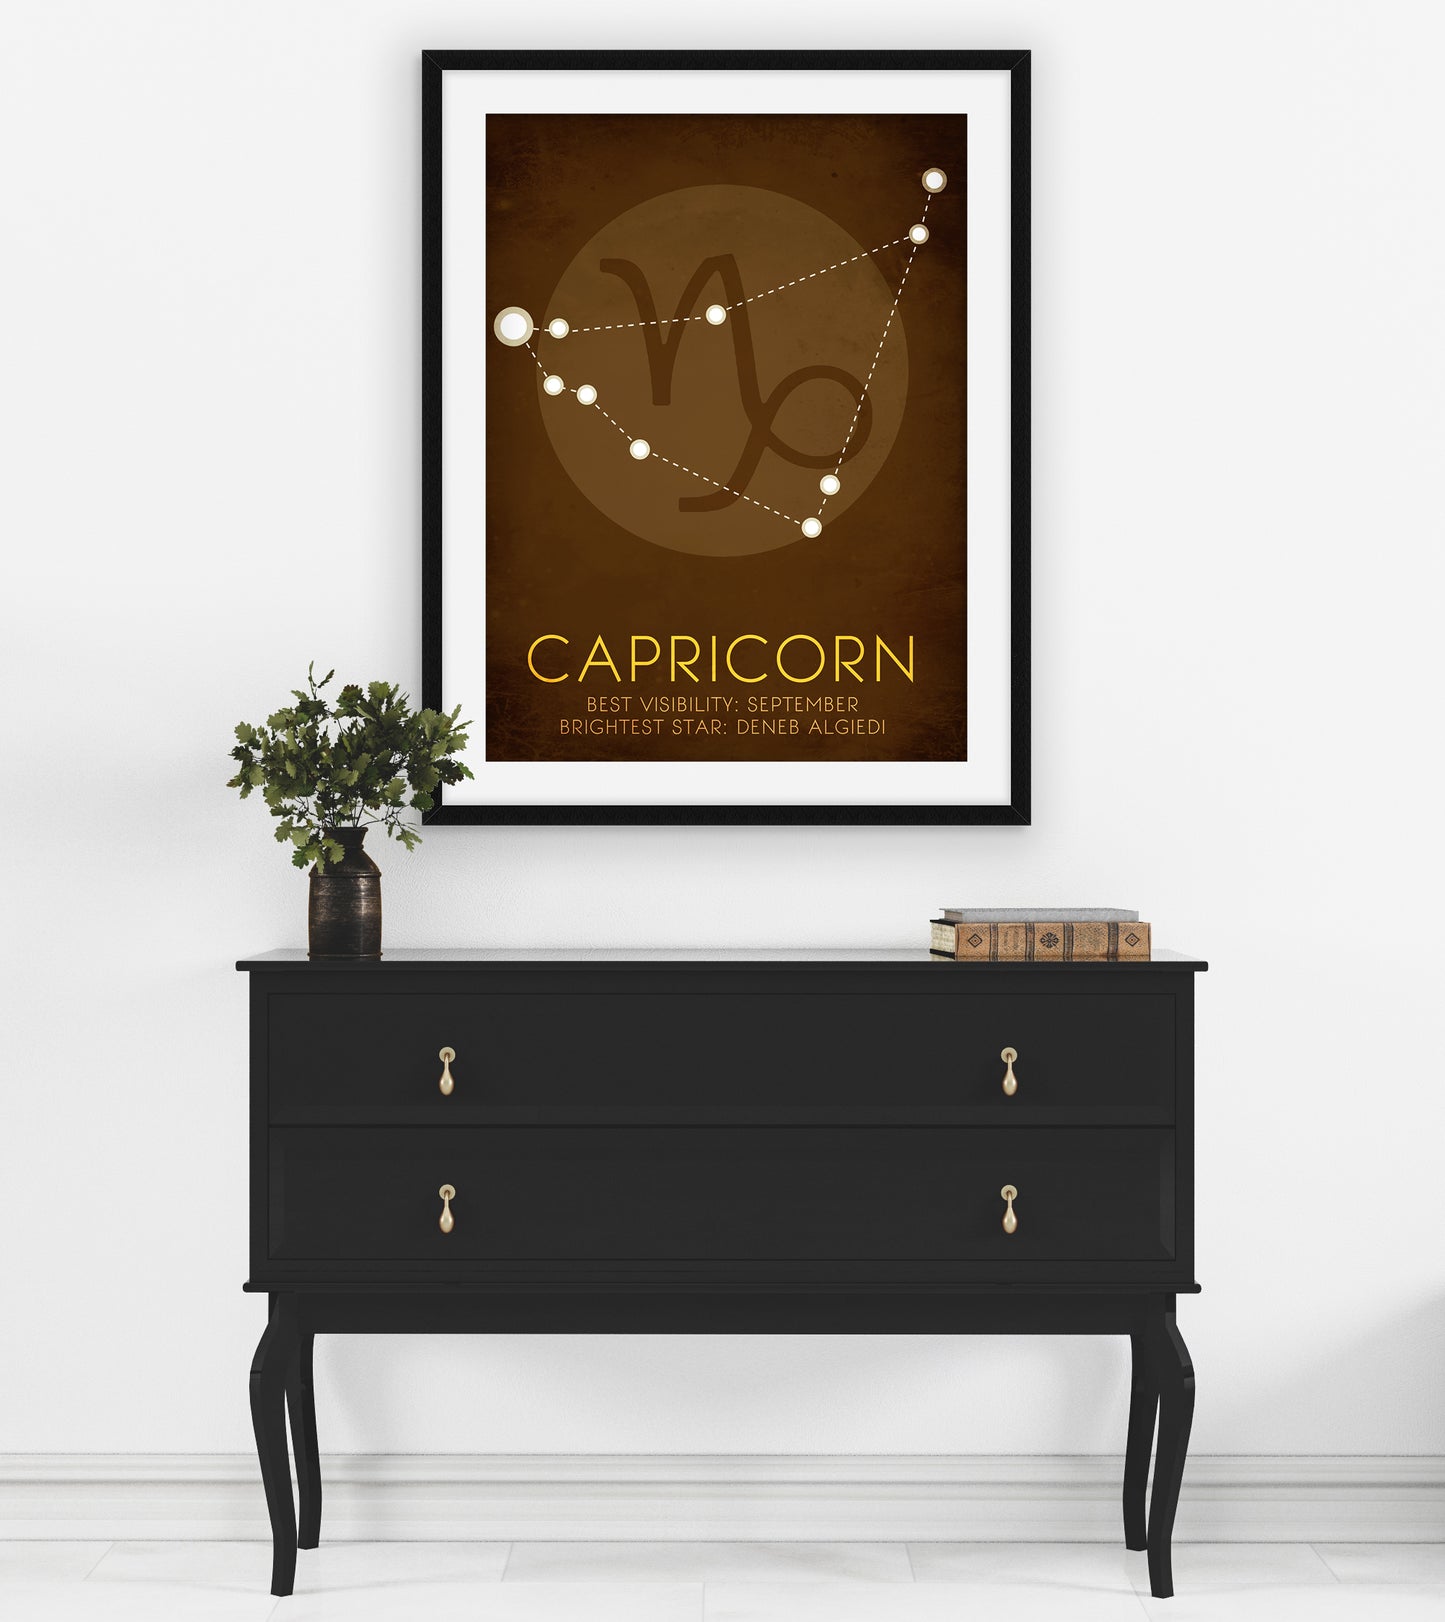 Capricorn Zodiac Constellation Art Print